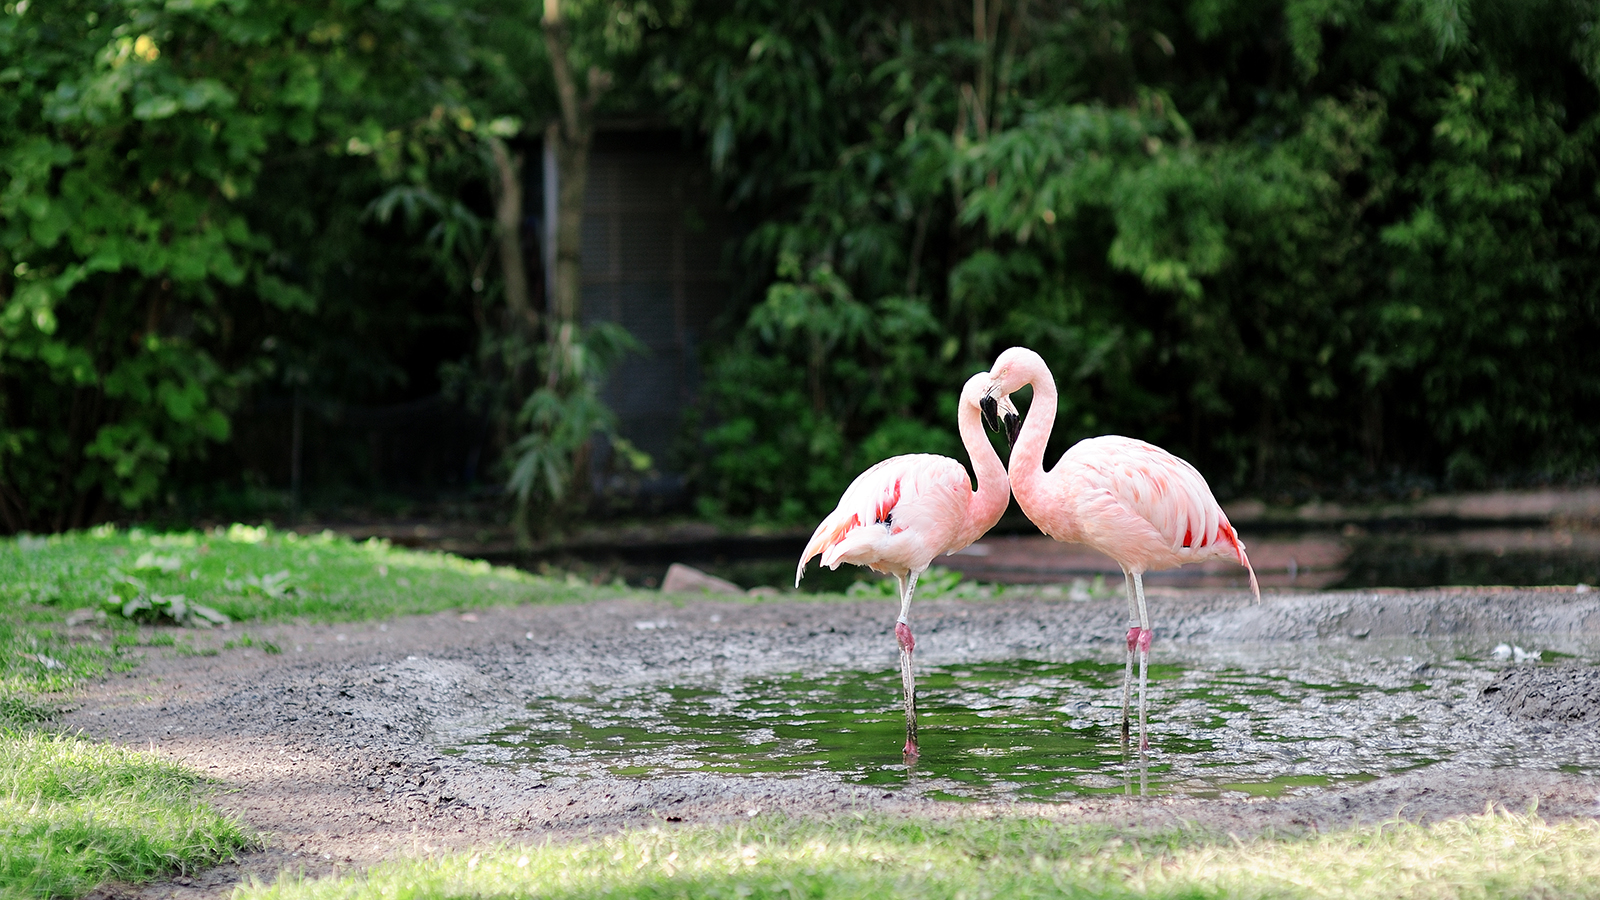 Pink flamingo at zoo, - the bird's neck draws a heart